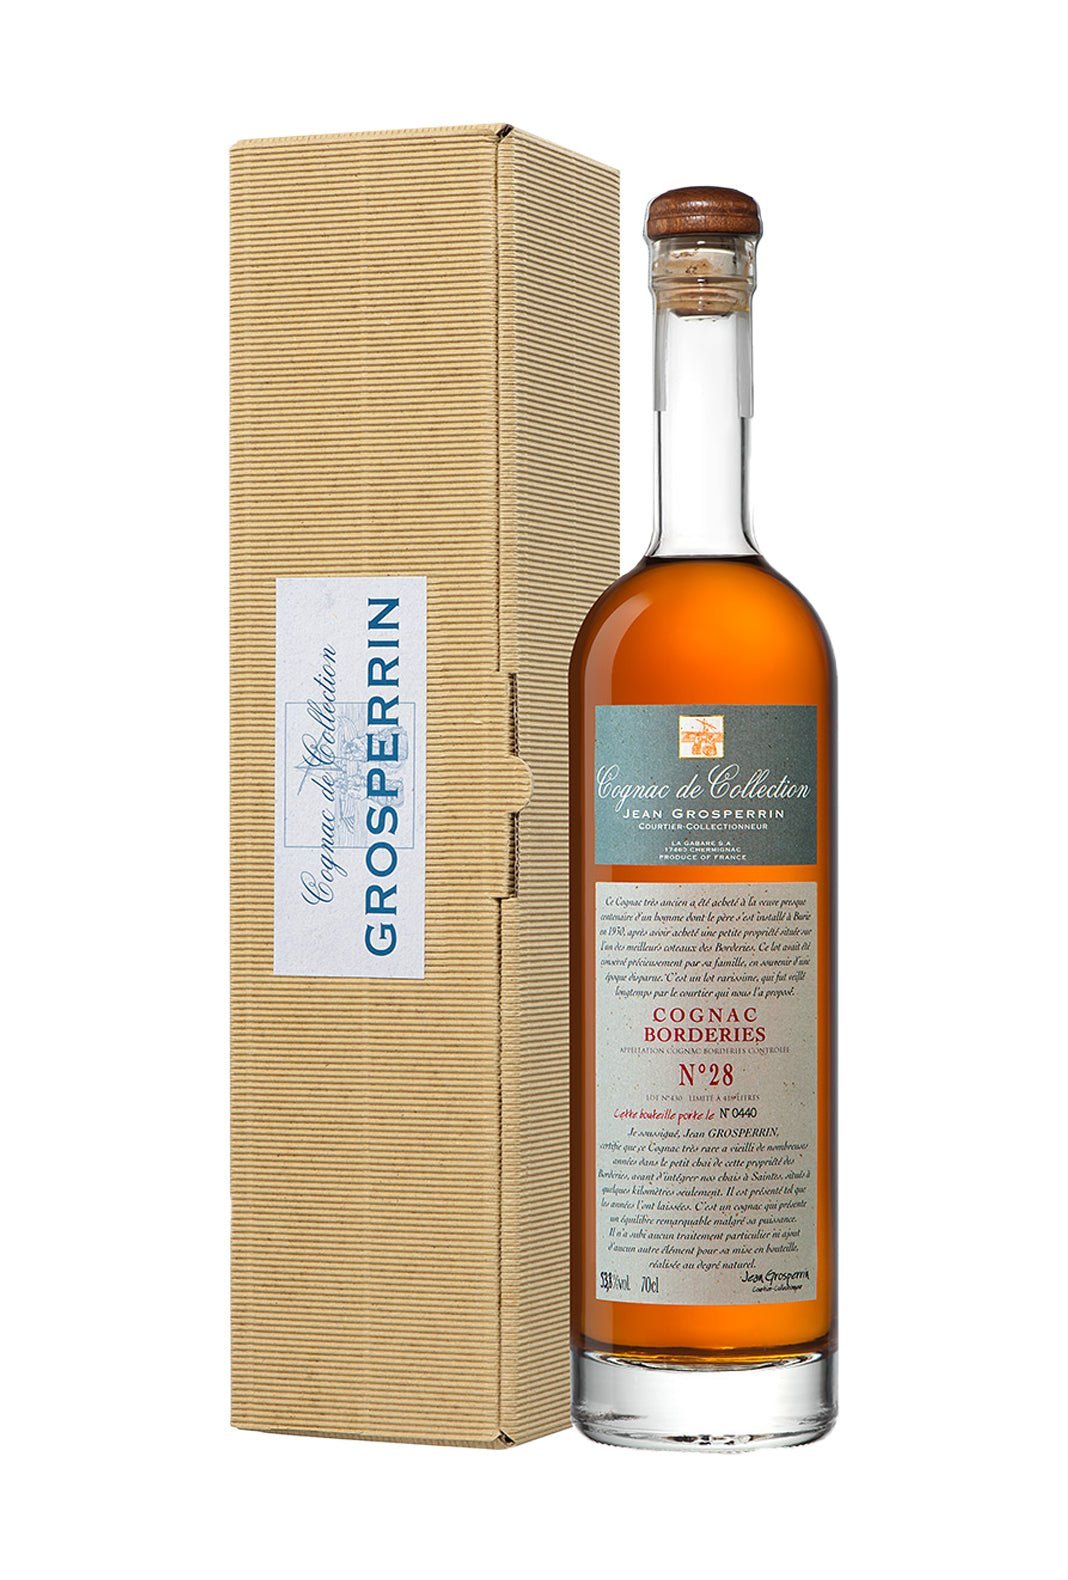 Grosperrin Cognac No.28 Borderies 53.8% 700ml | Brandy | Shop online at Spirits of France